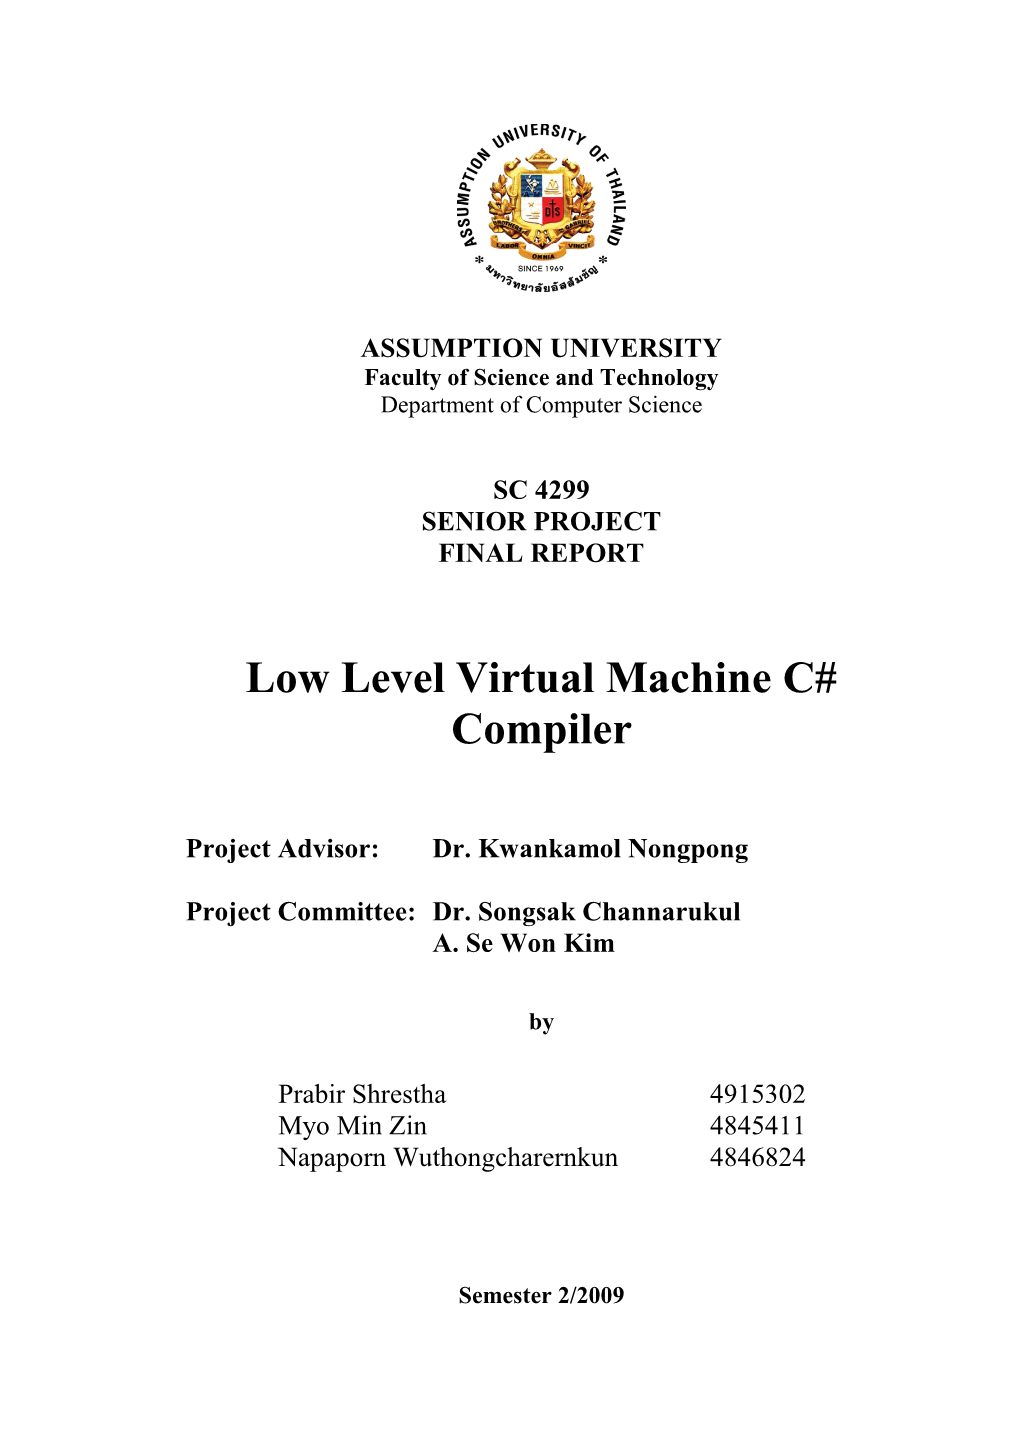 Low Level Virtual Machine C# Compiler